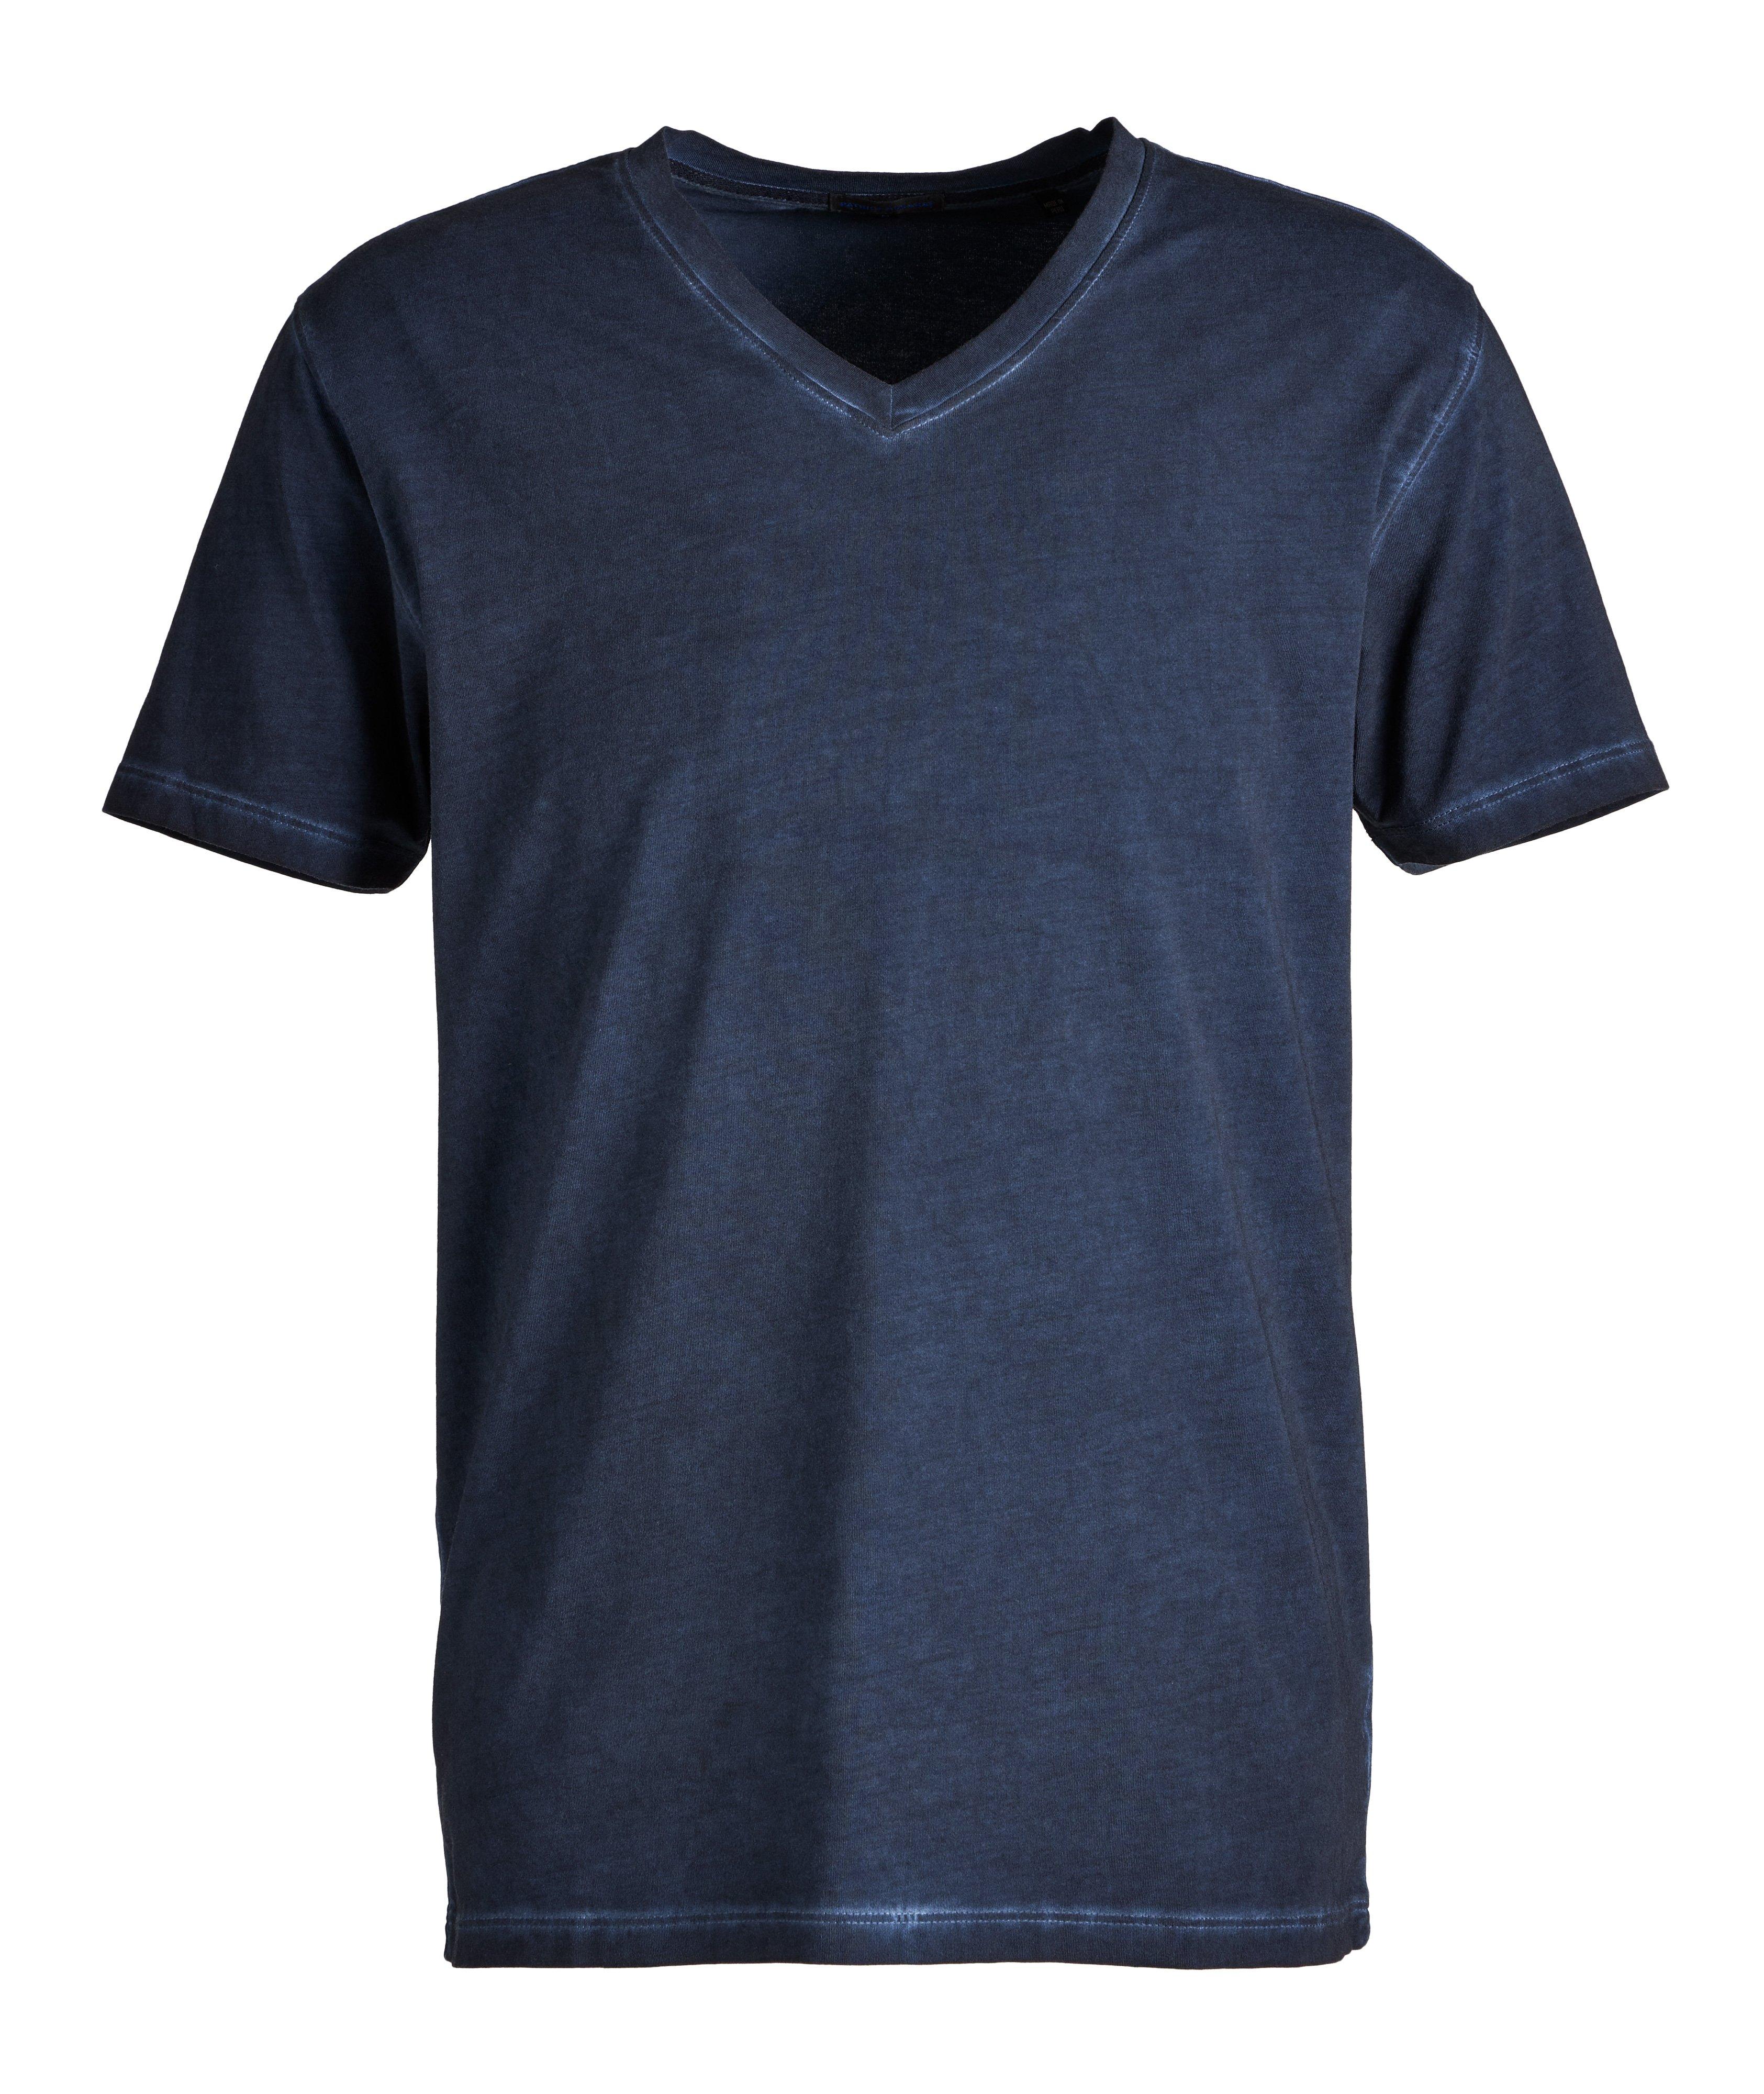 V-Neck Stretch-Cotton T-Shirt image 0